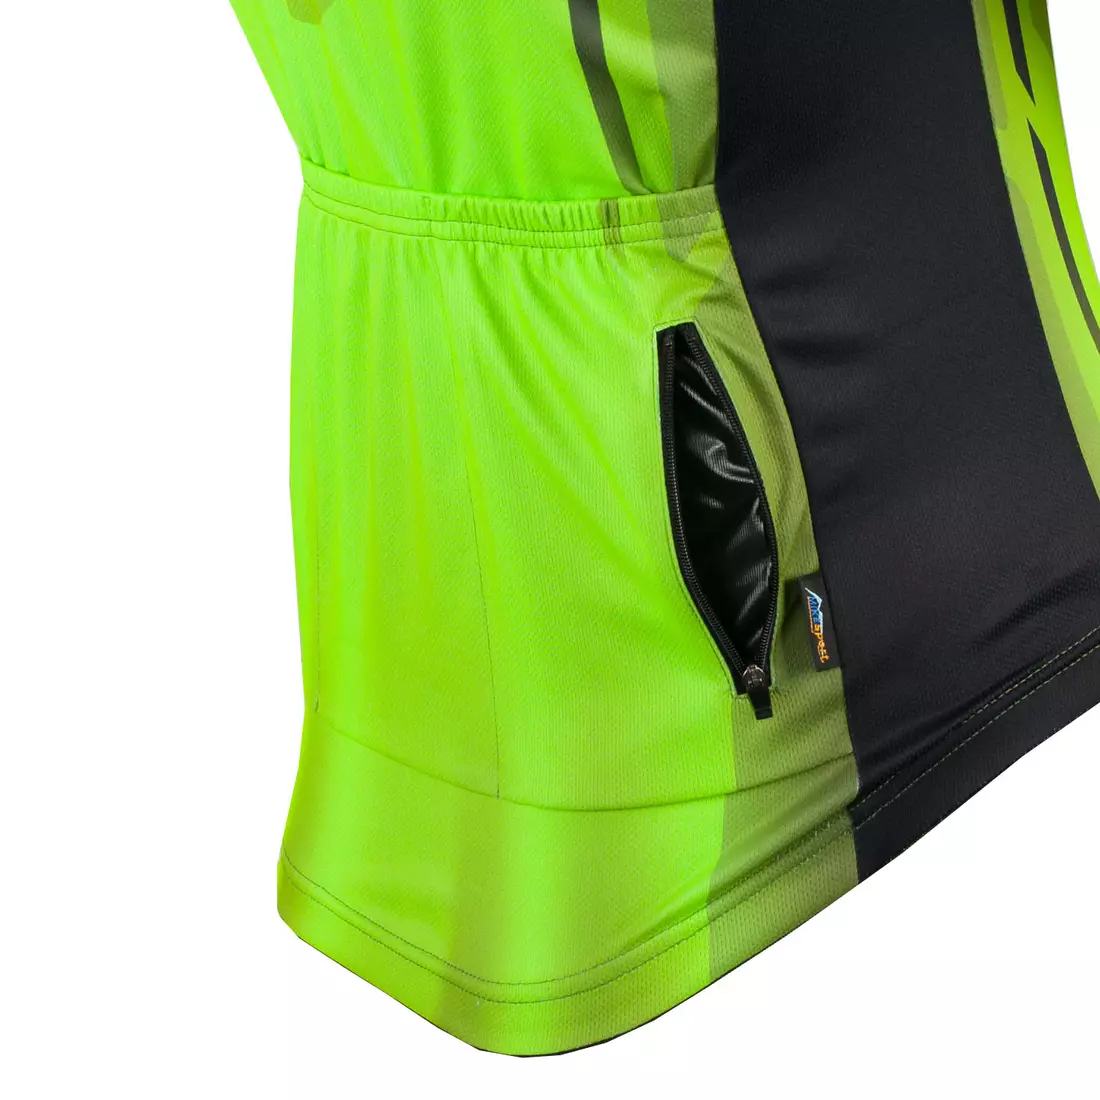 KAYMAQ DESIGN M37 men's cycling jersey, fluo green